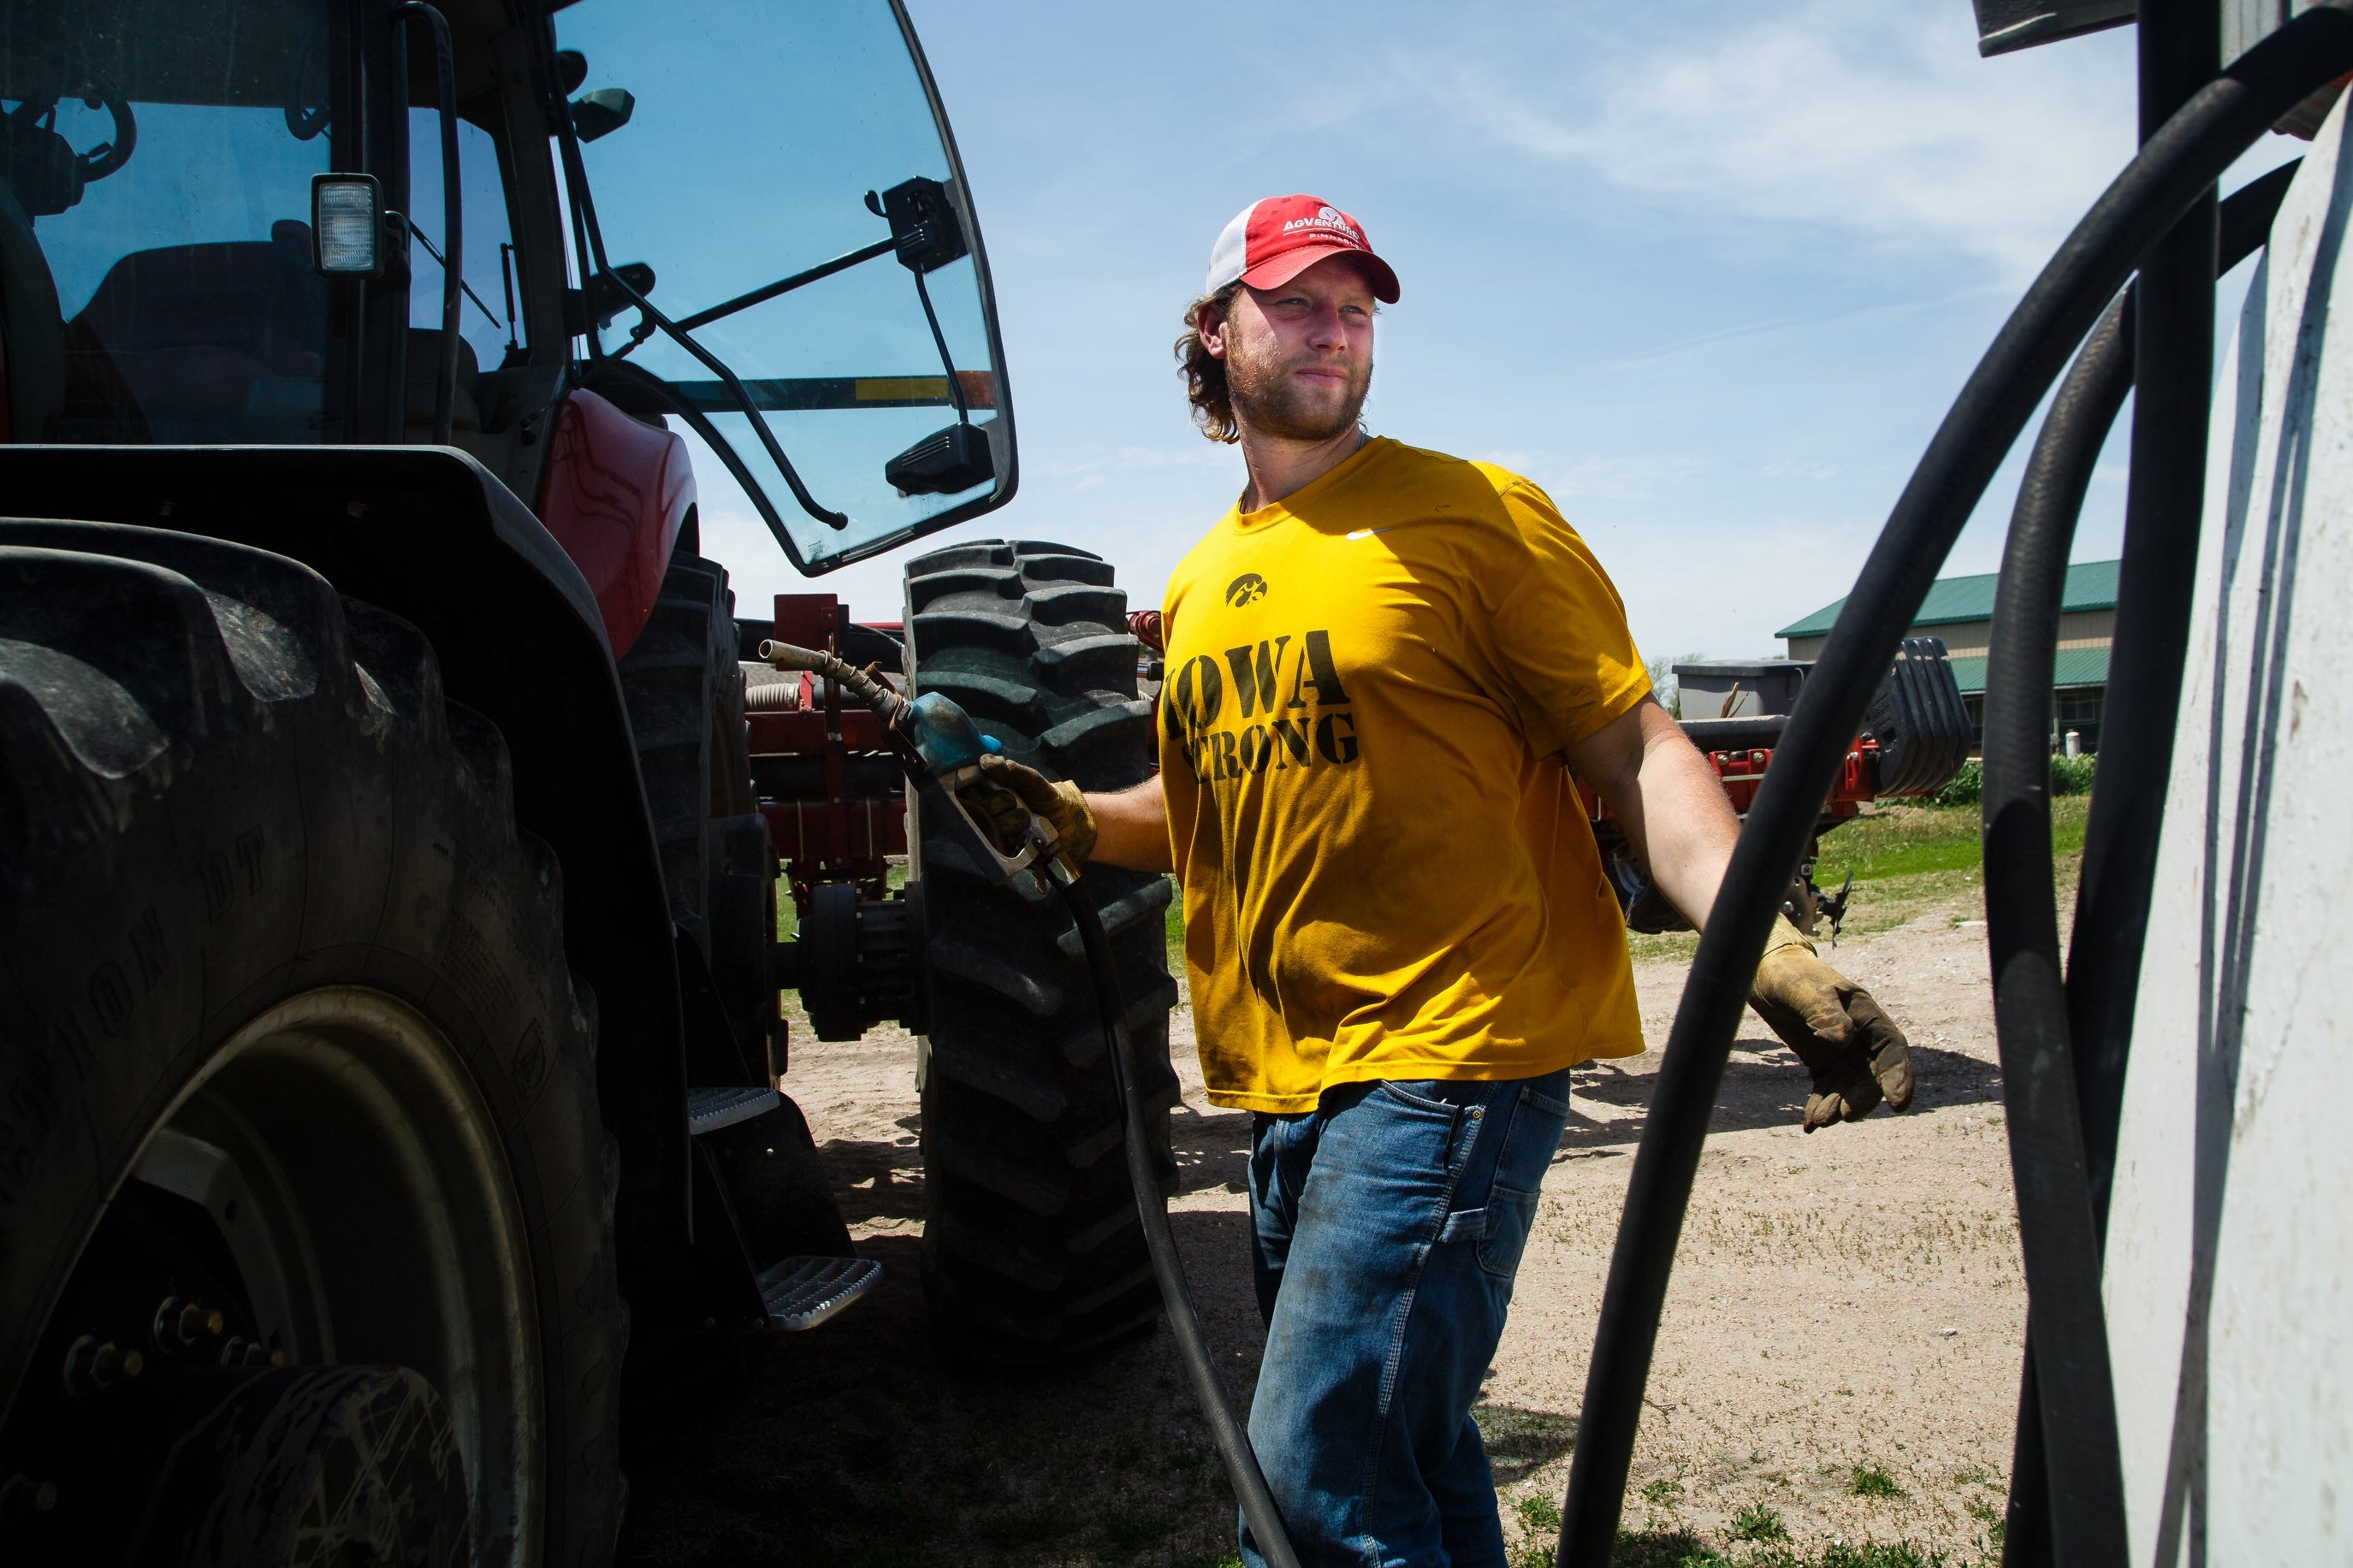 His NFL dreams fell apart. So former Iowa star Drew Ott is building a new life on the farm